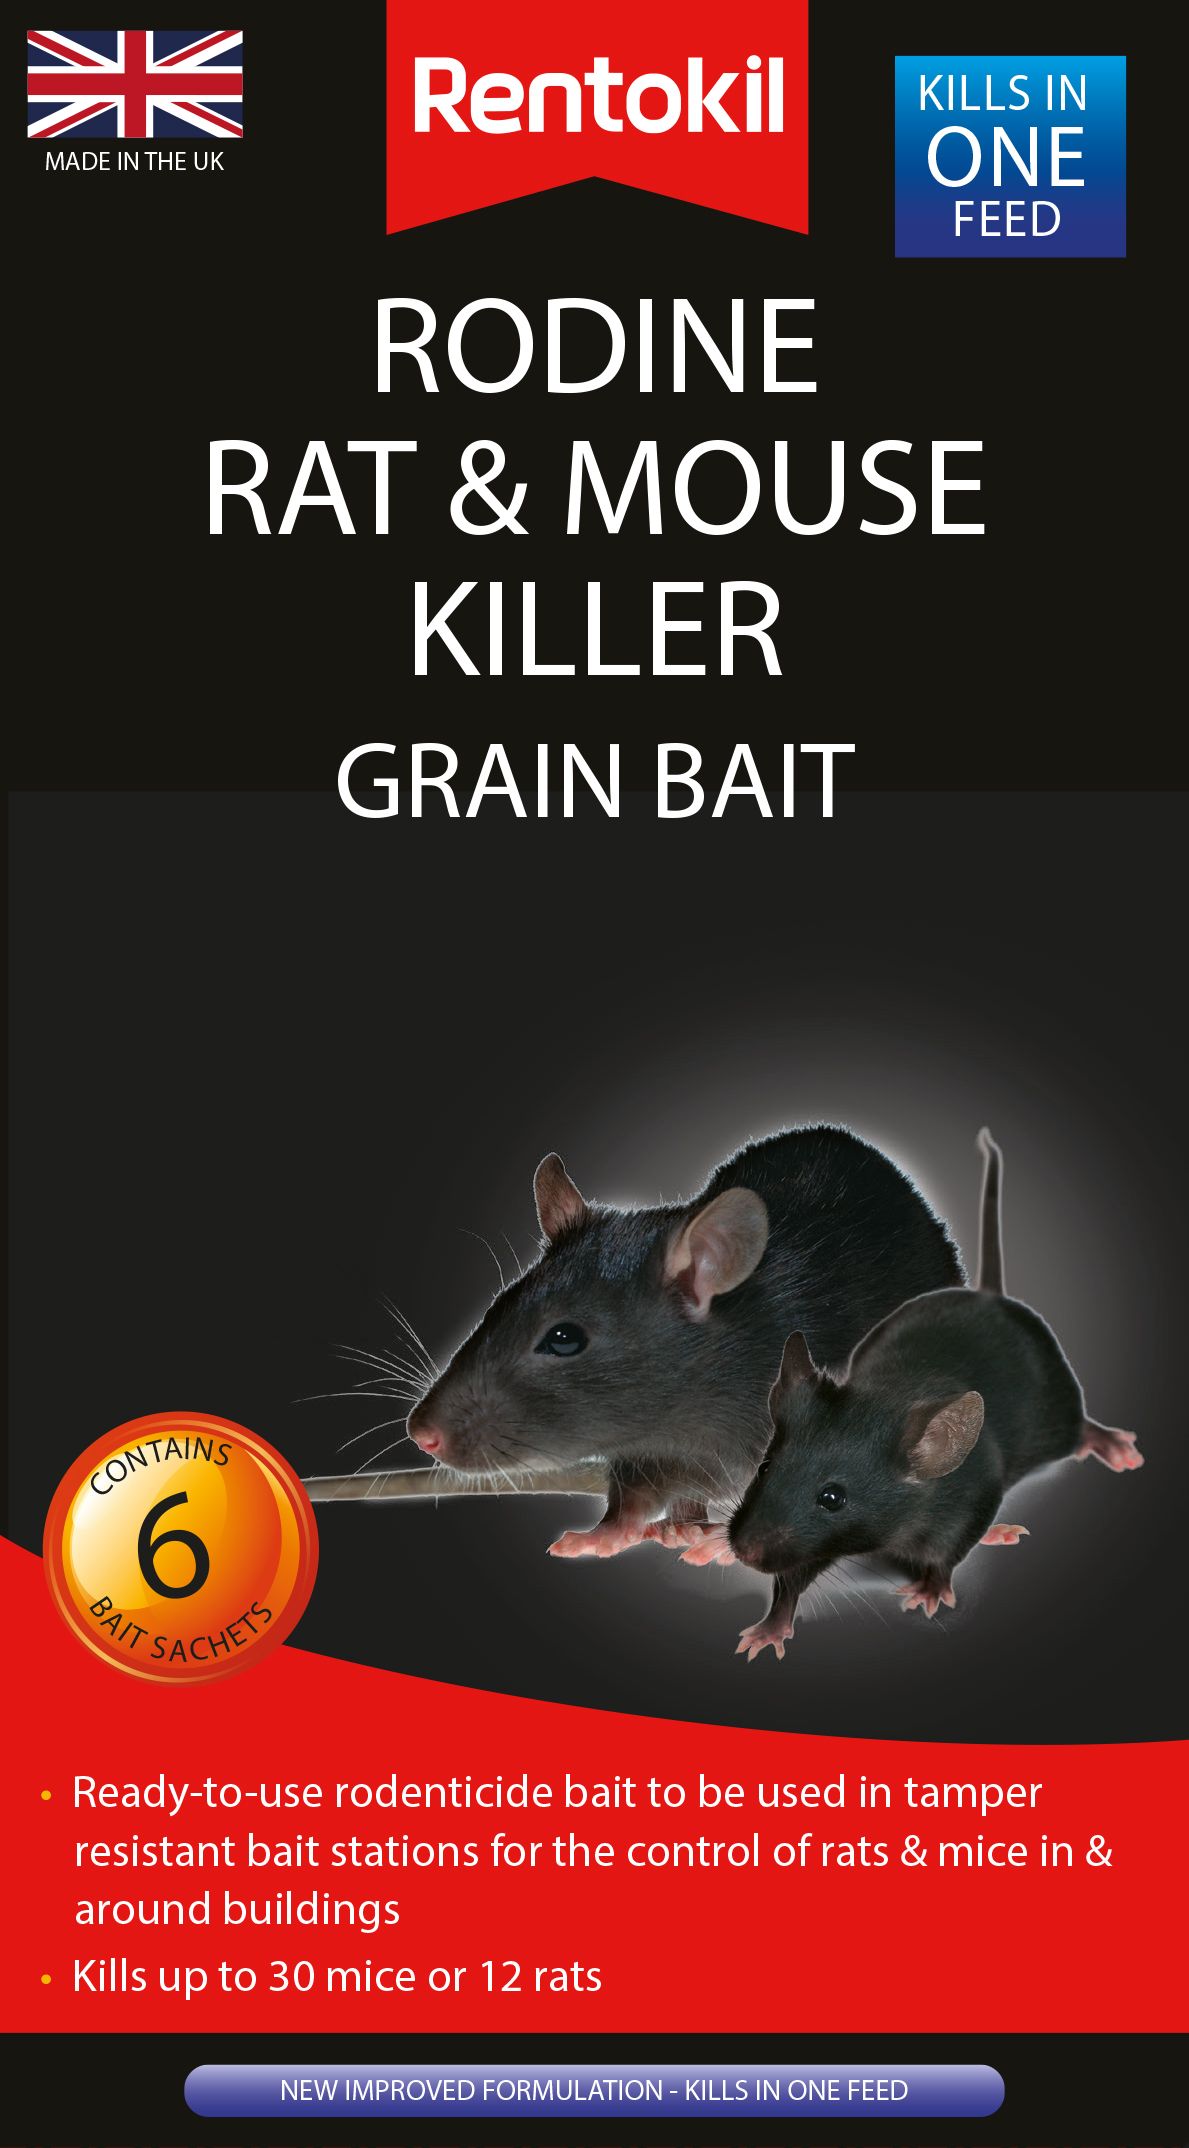 Rentikil Rat & Mouse Rodine Grain Bait 6 Sachet